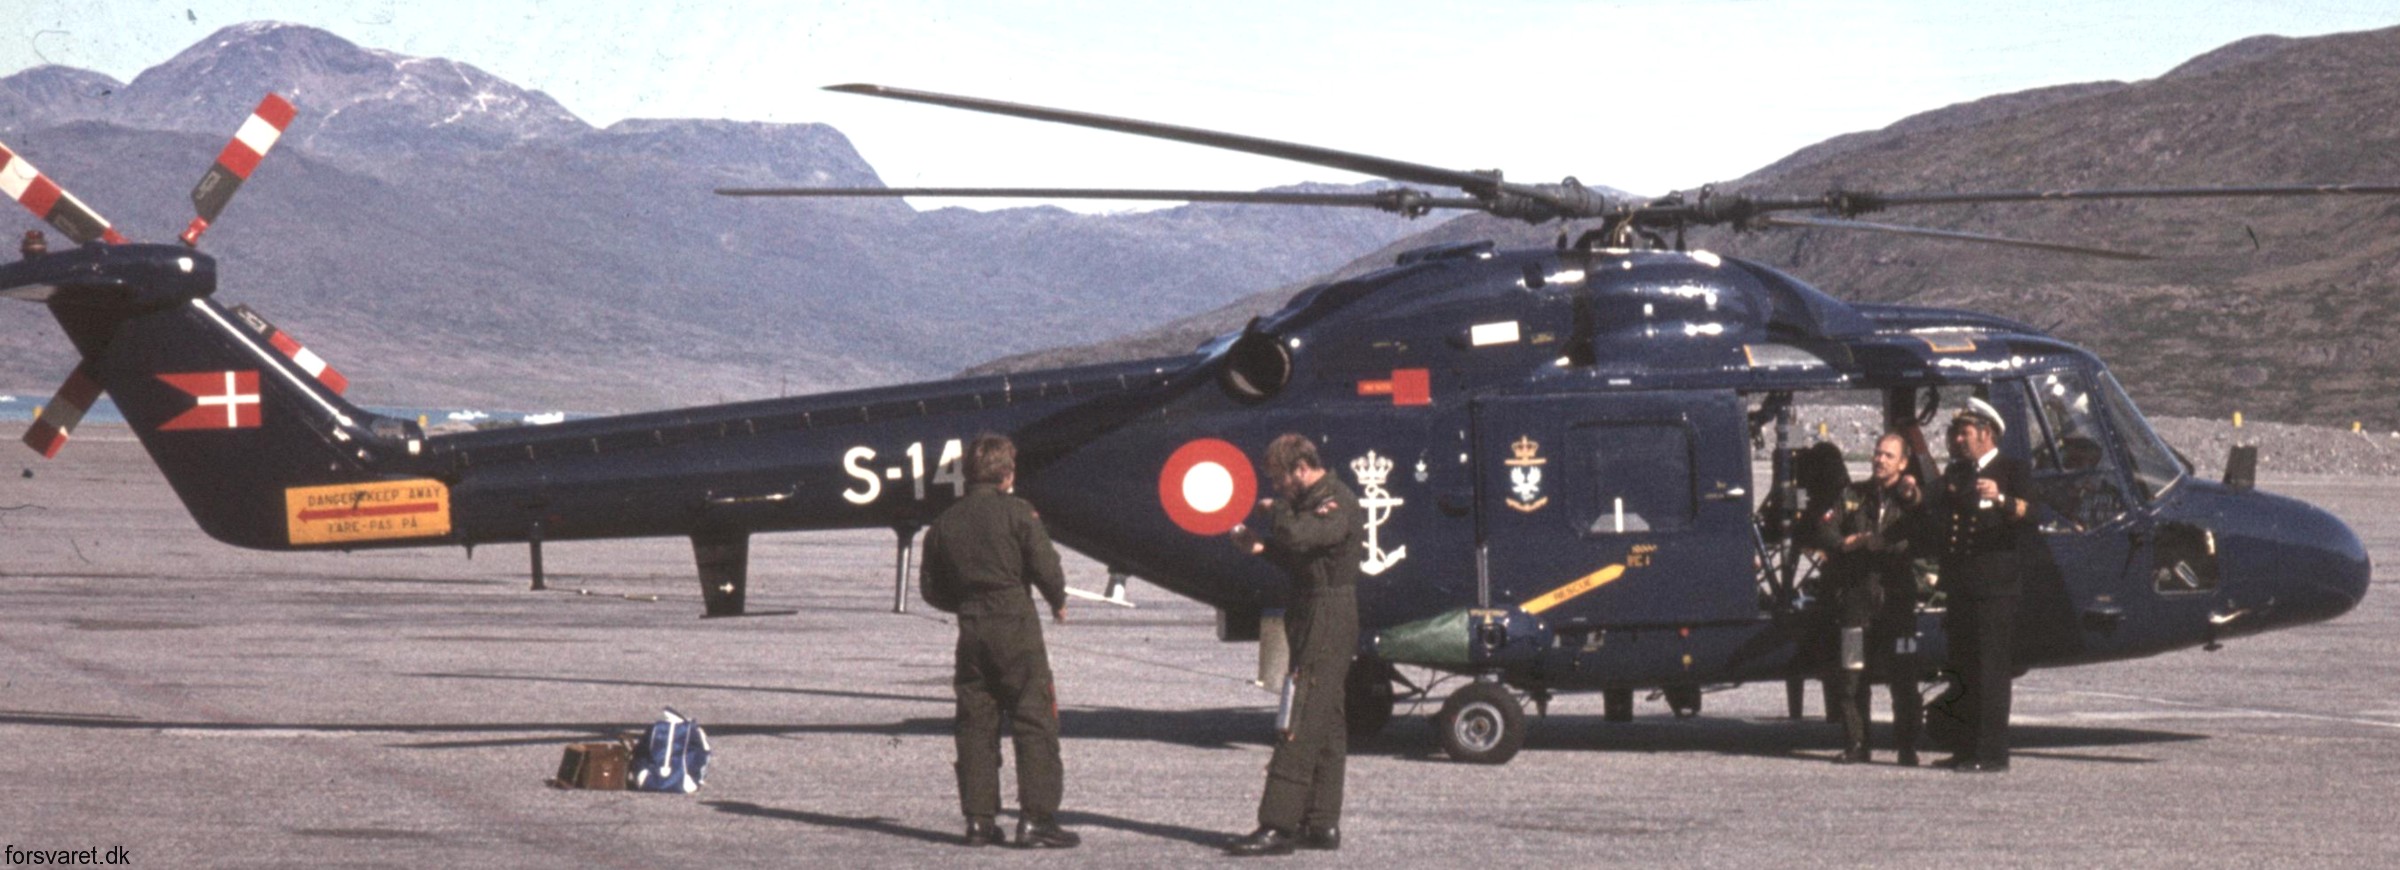 lynx mk.80 mk.90b helicopter westland royal danish navy air force kongelige danske marine flyvevabnet s-142 07